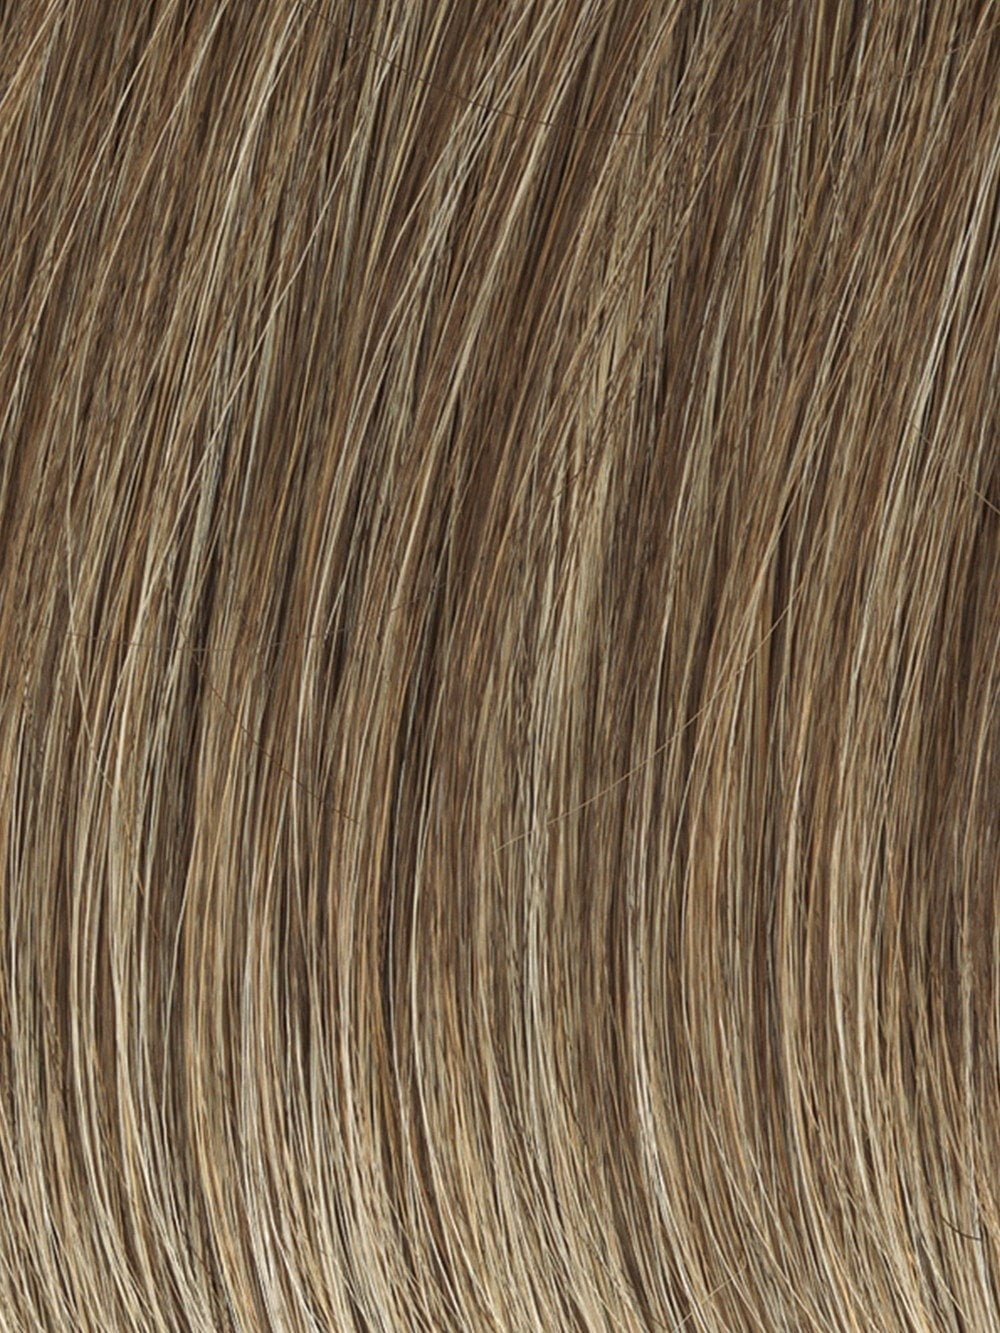 Brown Blonde | Medium to light brown with salon highlights 